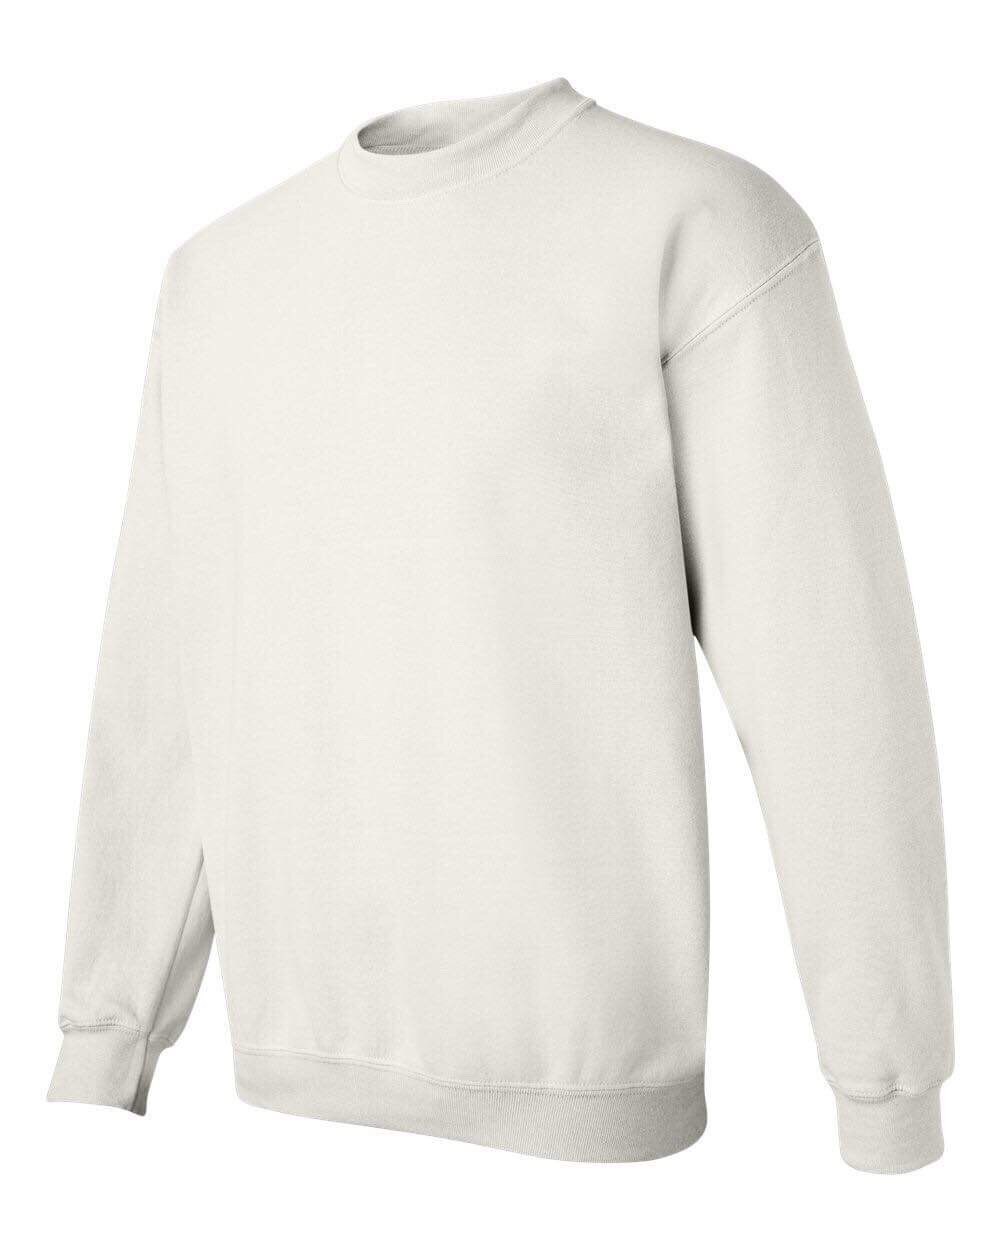 CottonandPearlsVinyl Adult Unisex Monogram Crewneck Sweatshirt